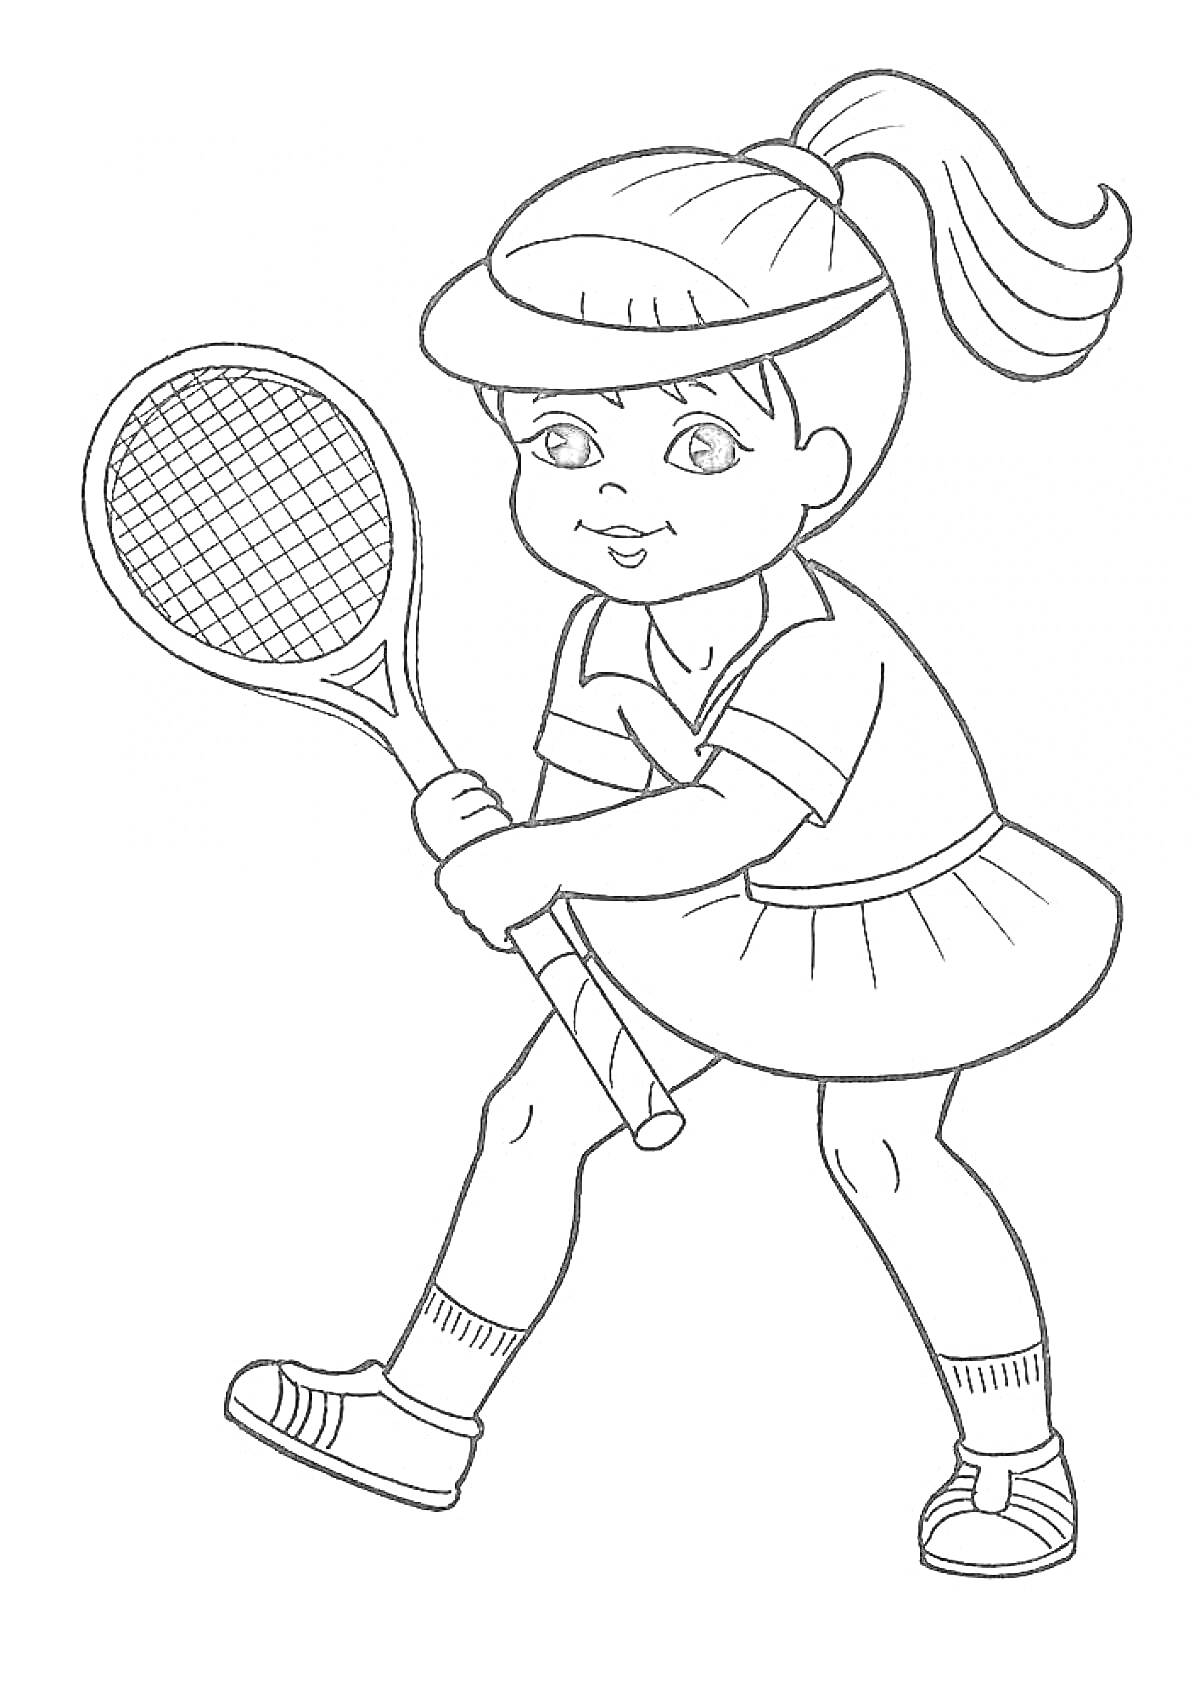 Раскраска Девочка, играющая в теннис (ракетка, теннисная форма, кепка)